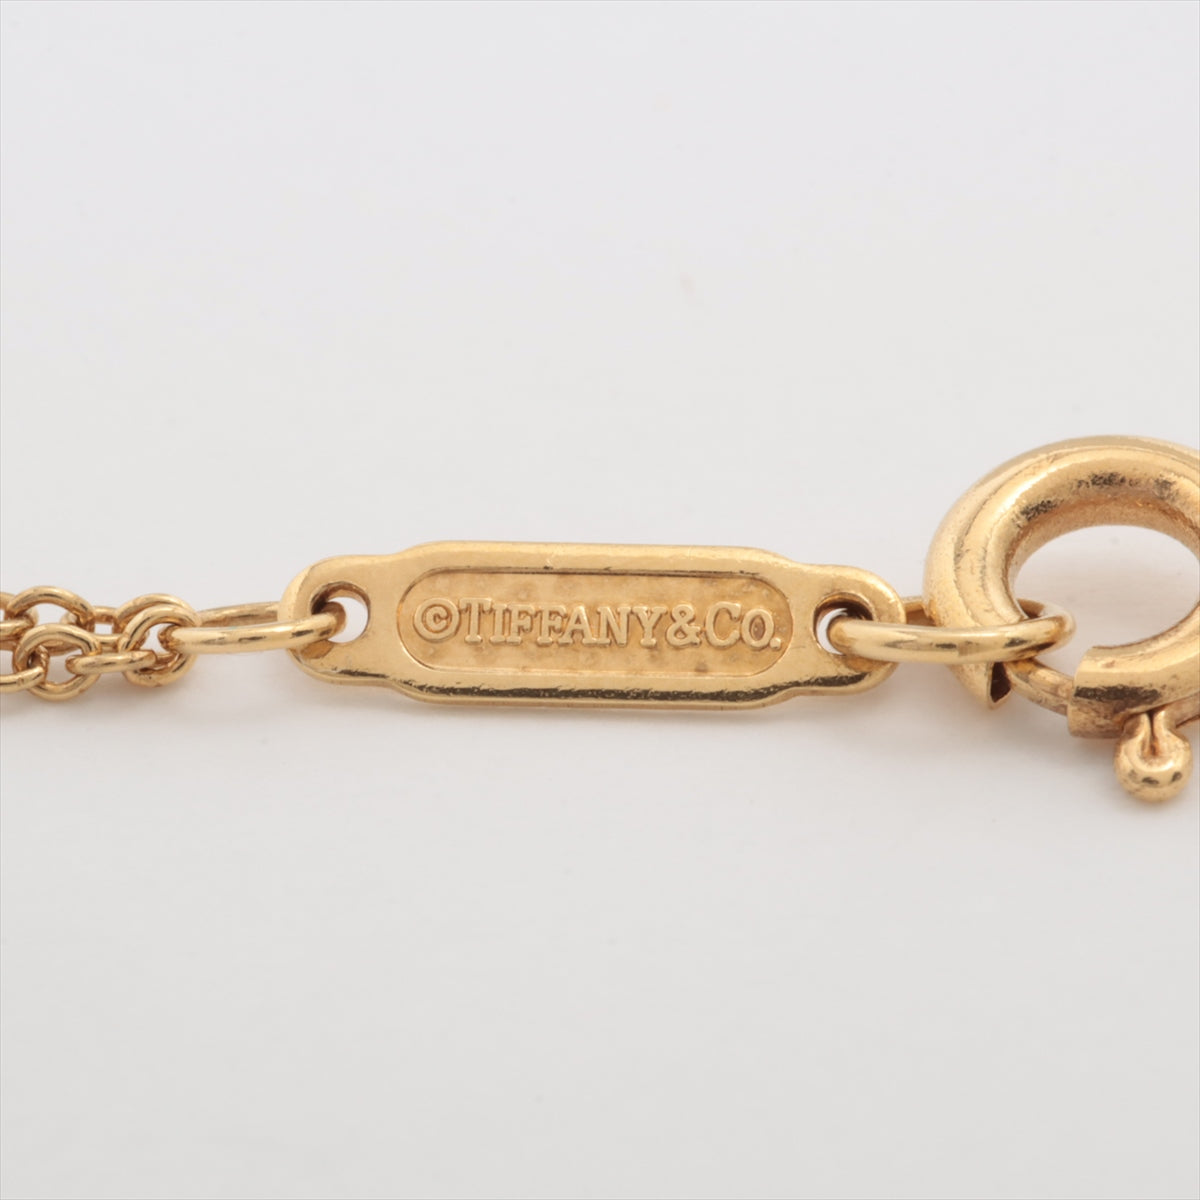 Tiffany&#39;s Infinity Necklace 750 (YG) 5.2g